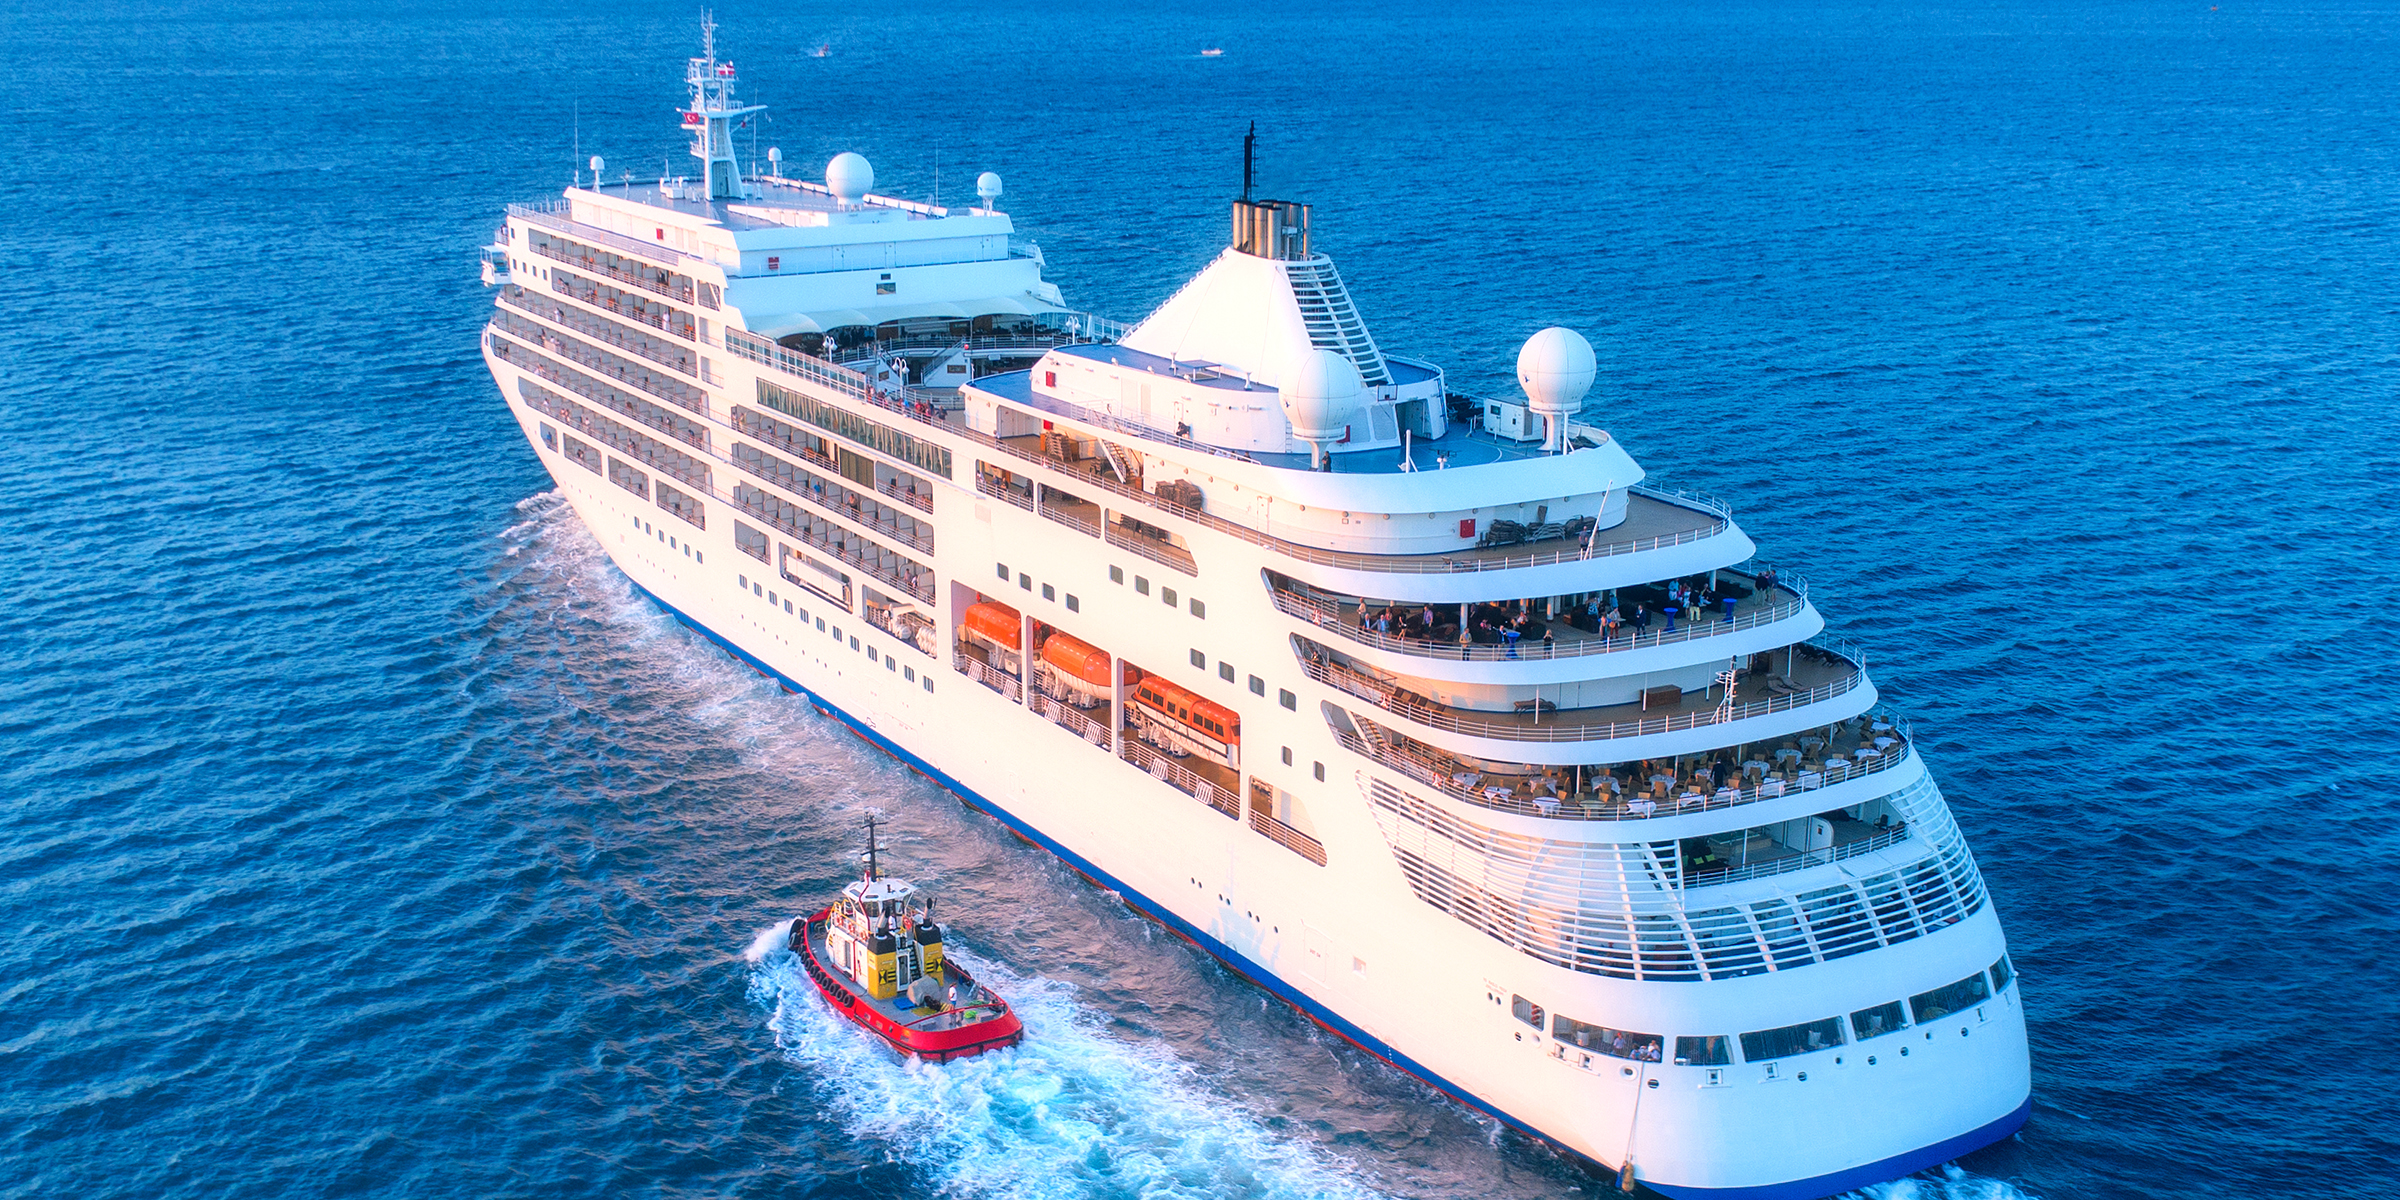 A cruise ship | Source: Shutterstock